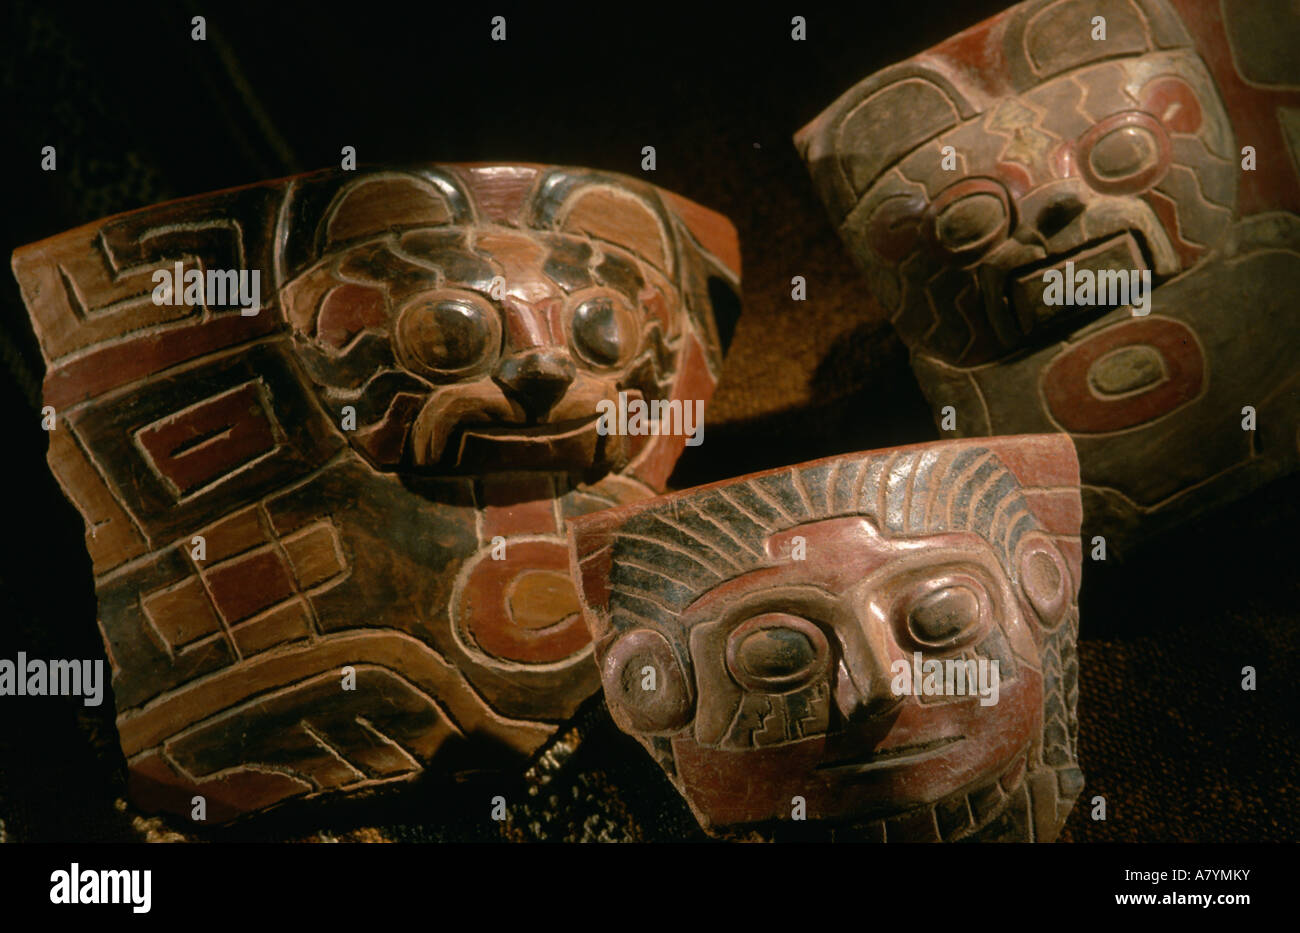 Wari Keramikscherben, Imperien der Sonne, Peru, Wari, Huari, Universidad Nacional de San Antonio Abad del Cusco, Peru Stockfoto